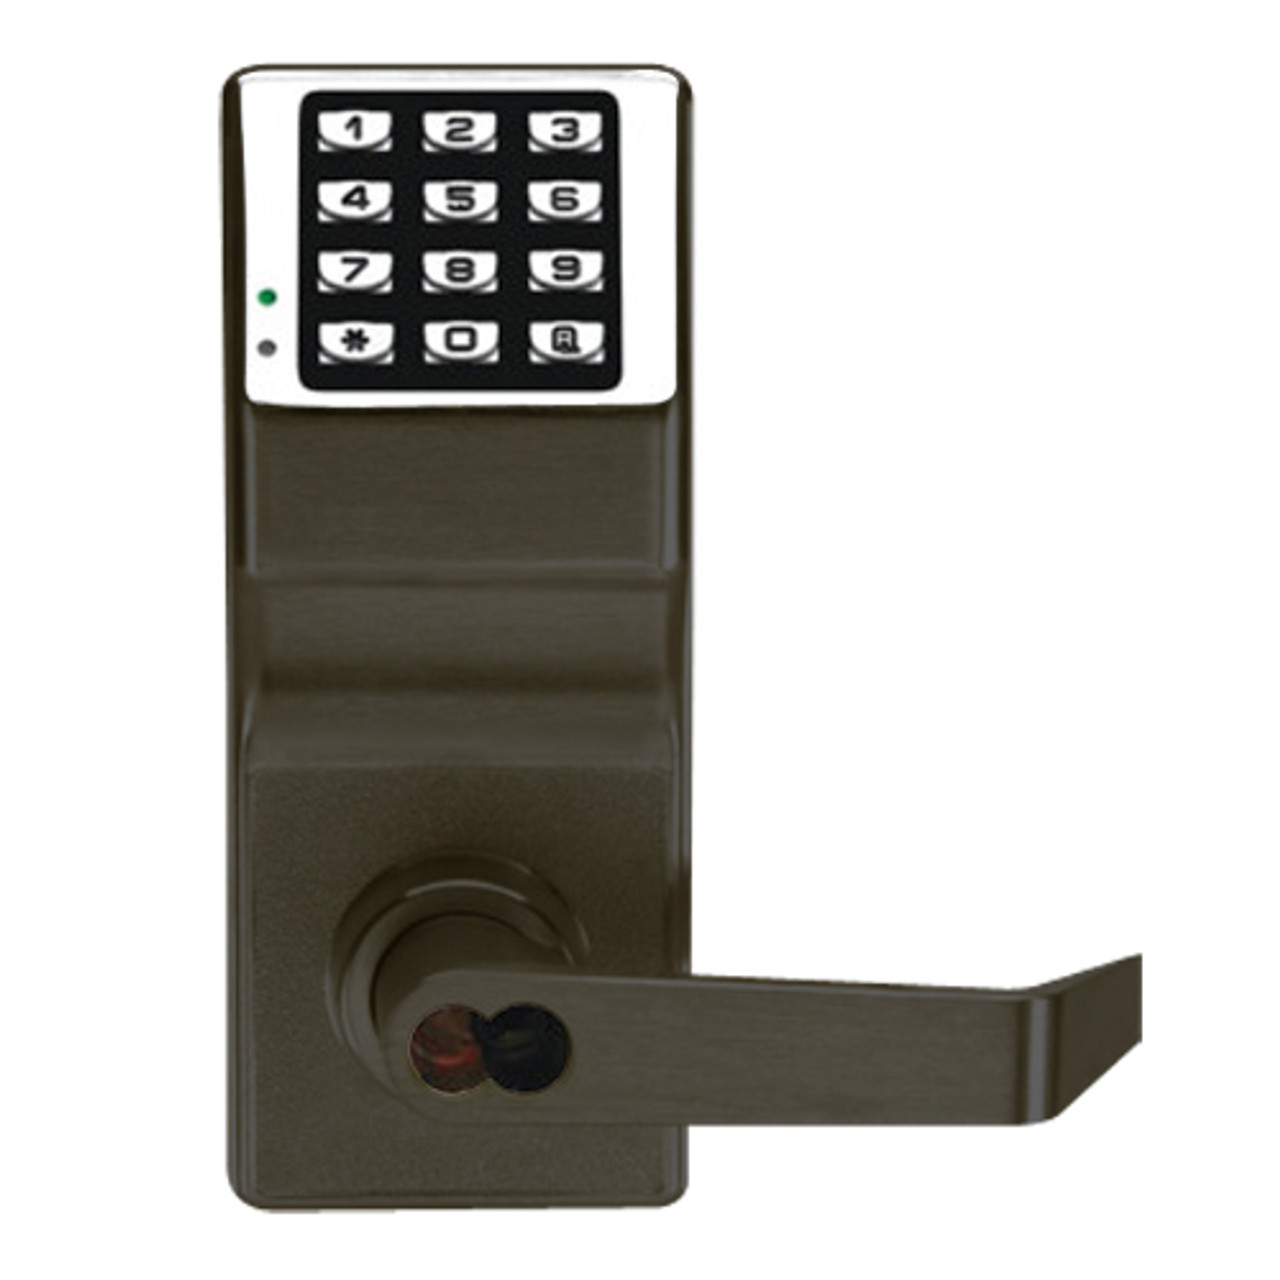 DL2700IC-C-US10B Alarm Lock Trilogy Electronic Digital Lock in Duronodic Finish